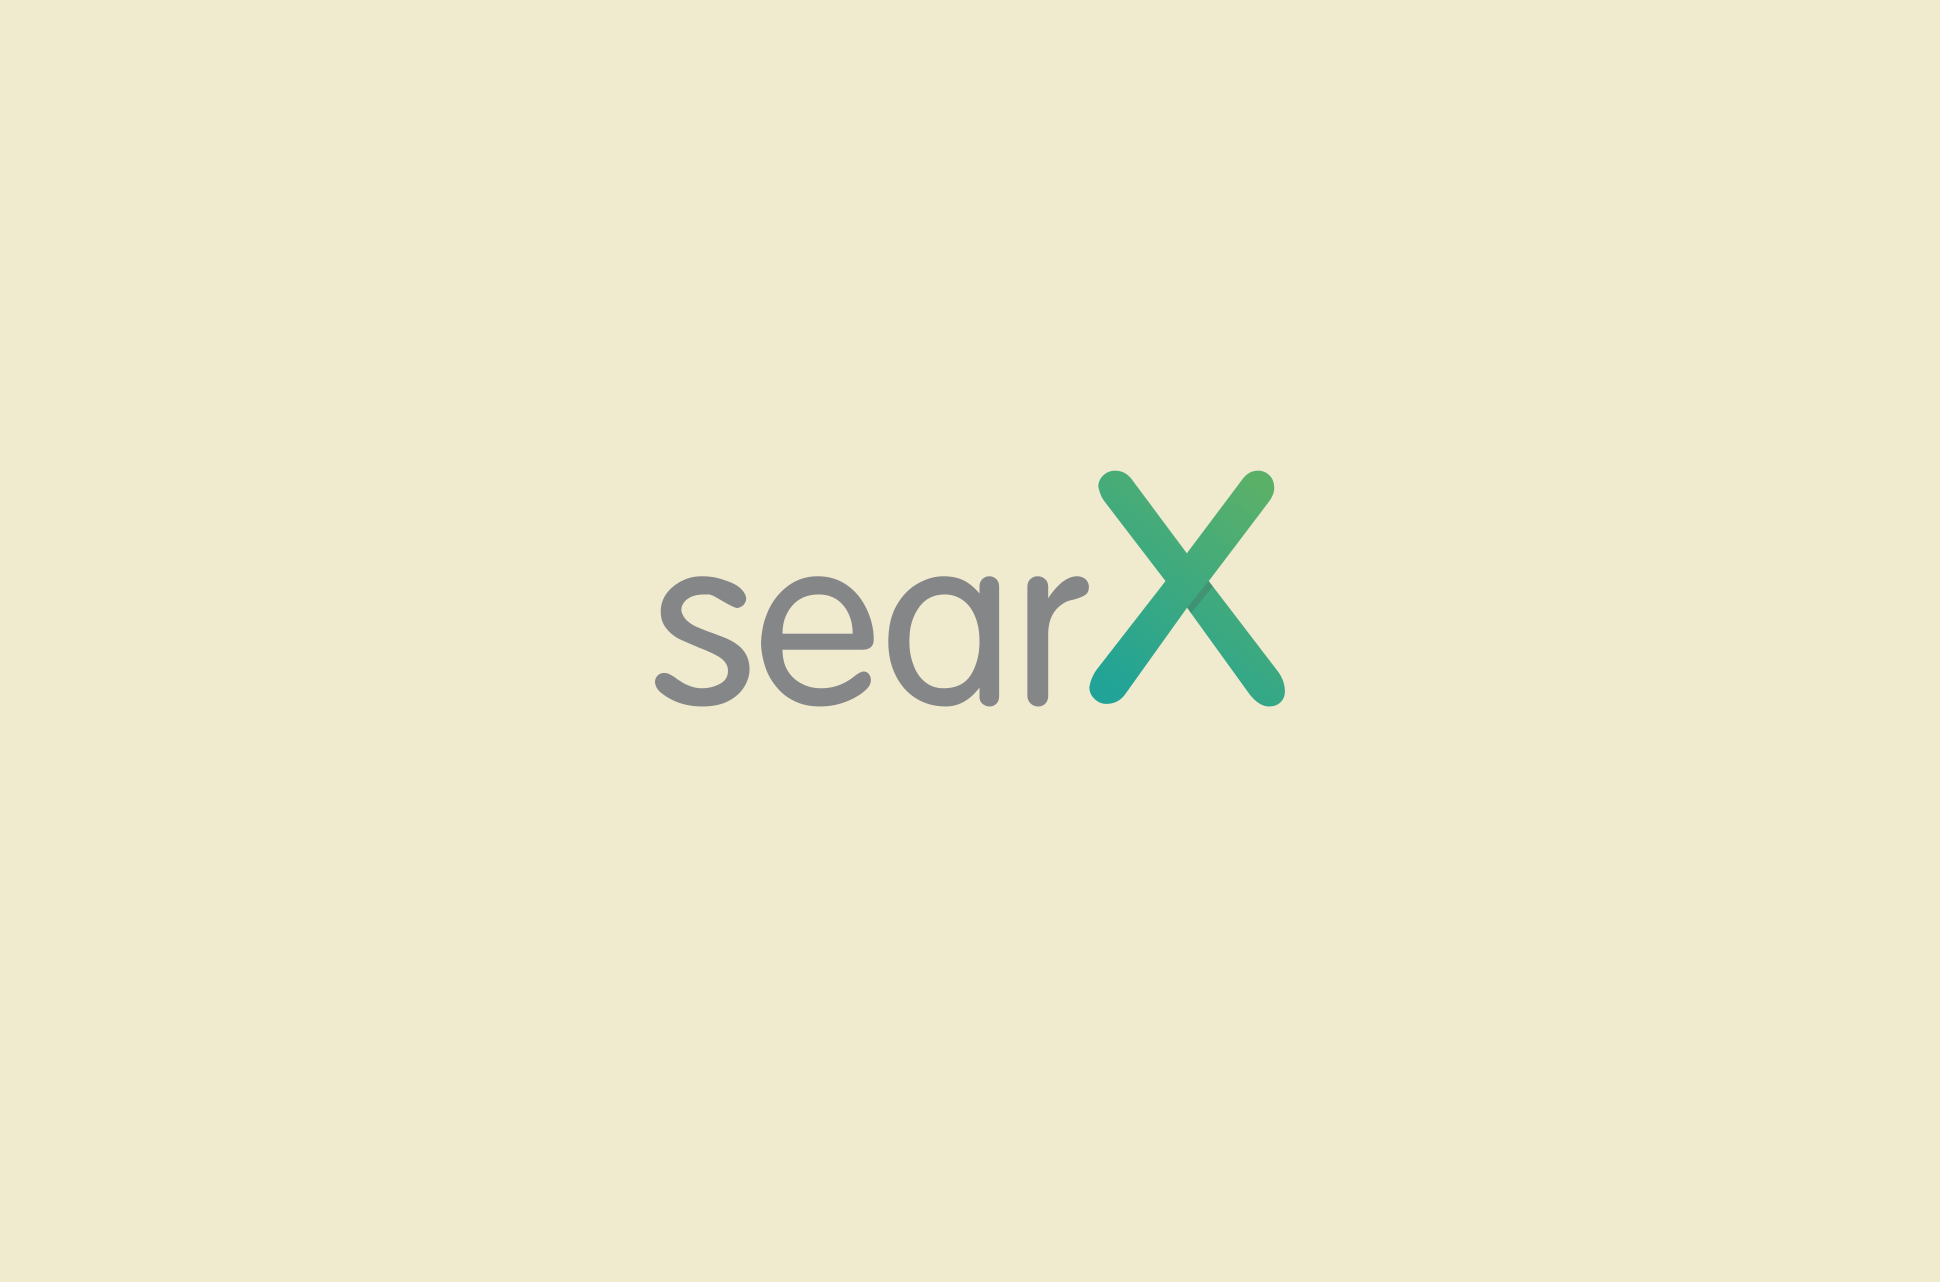 Searxc